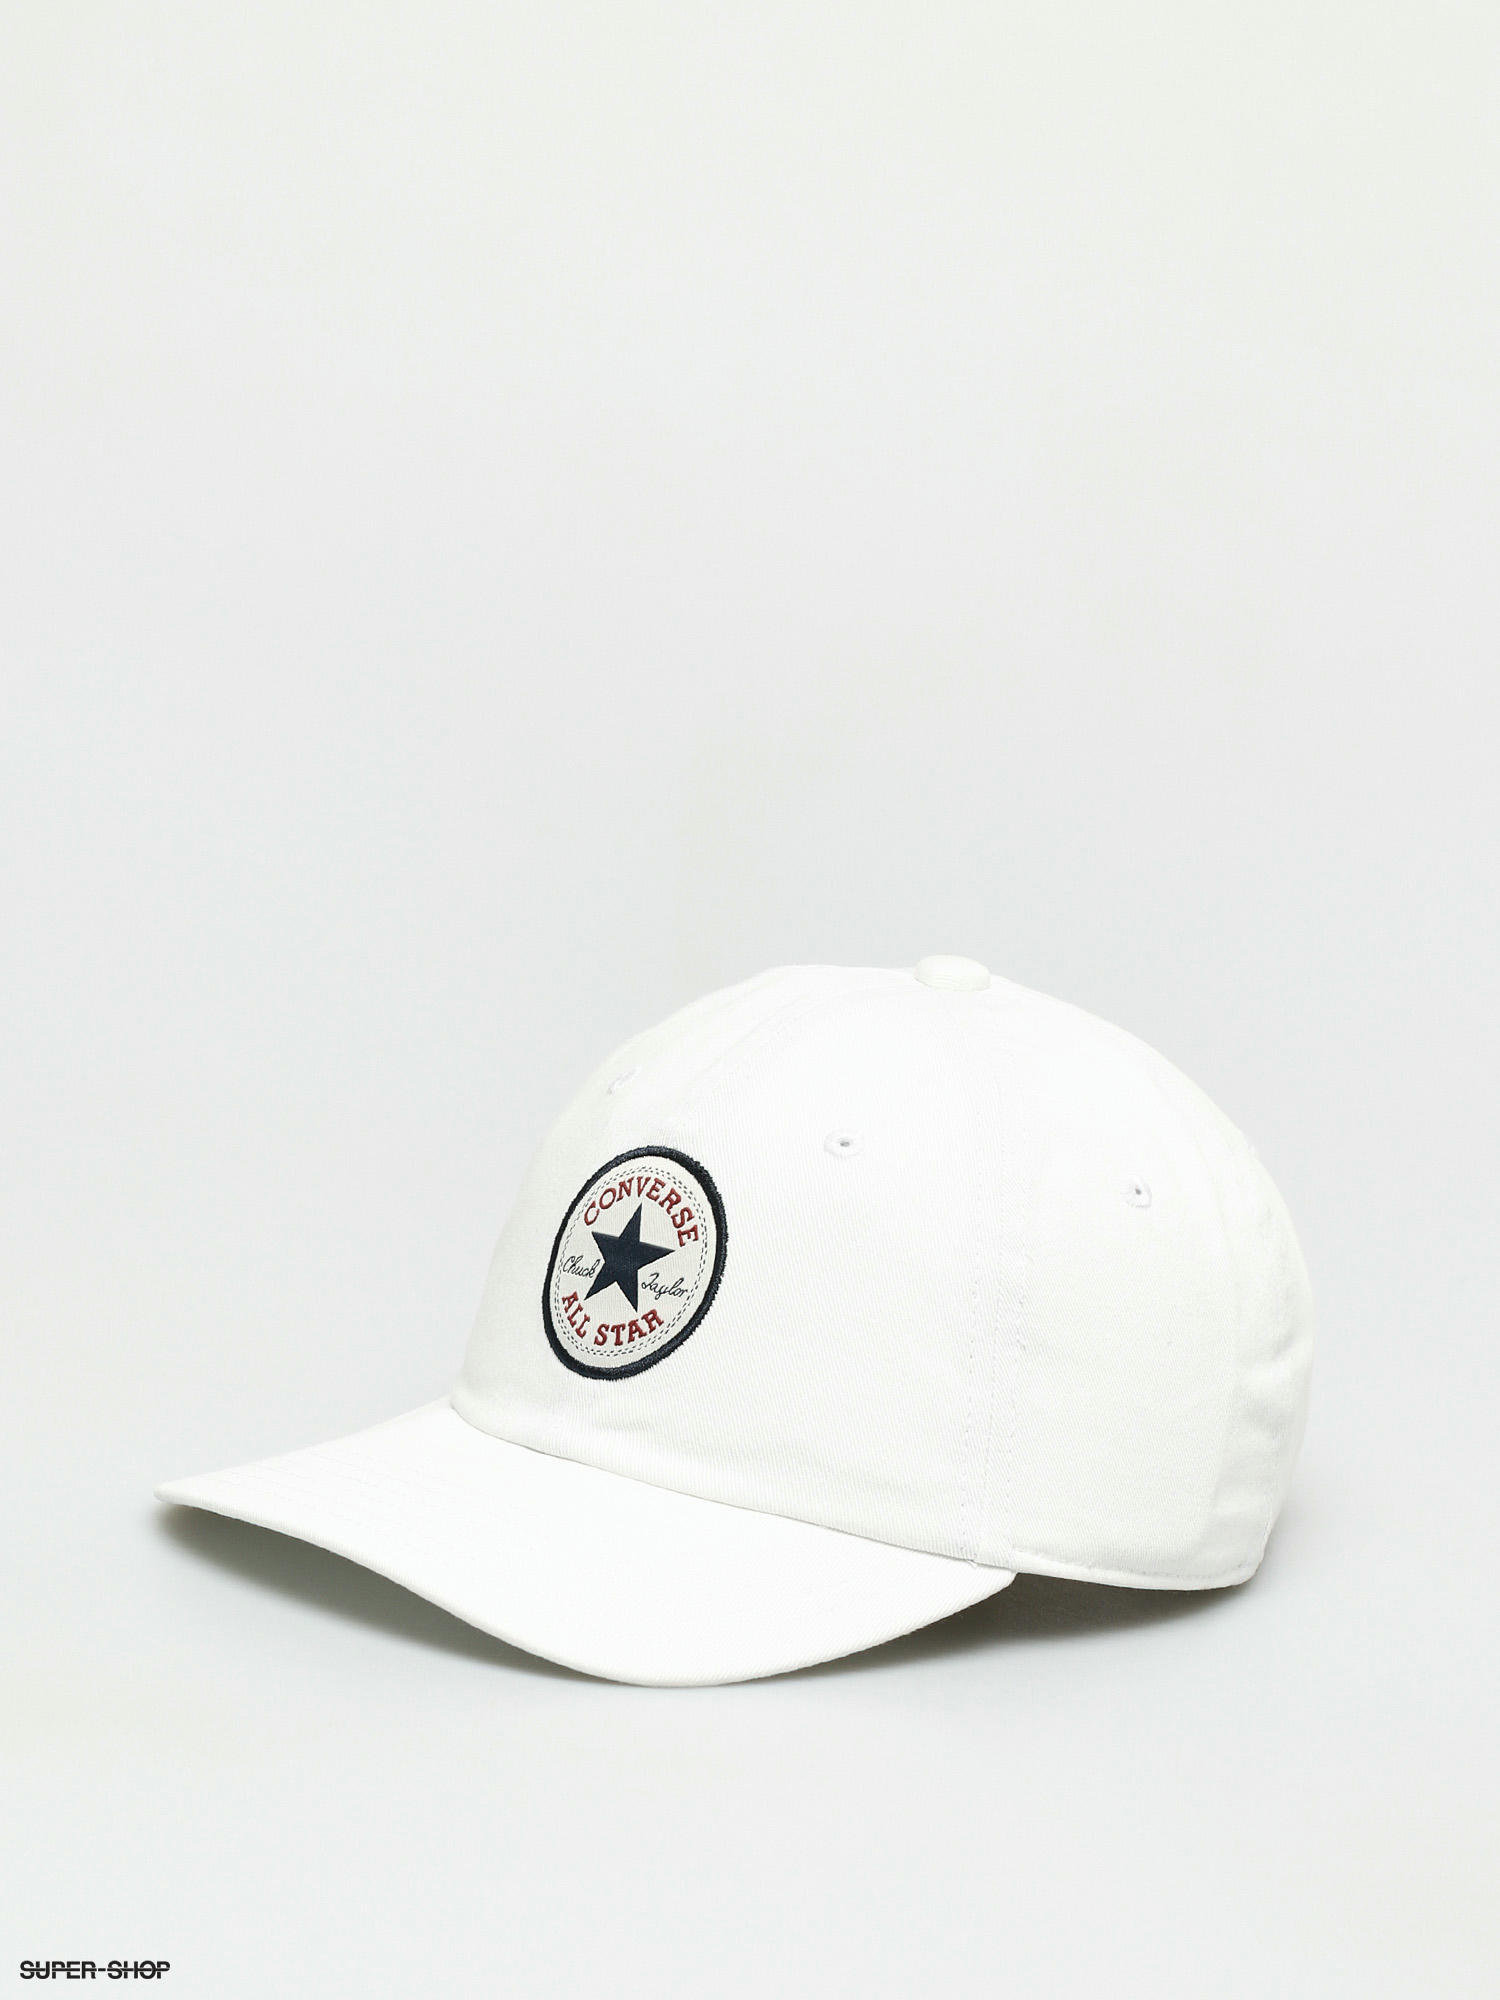 white converse cap